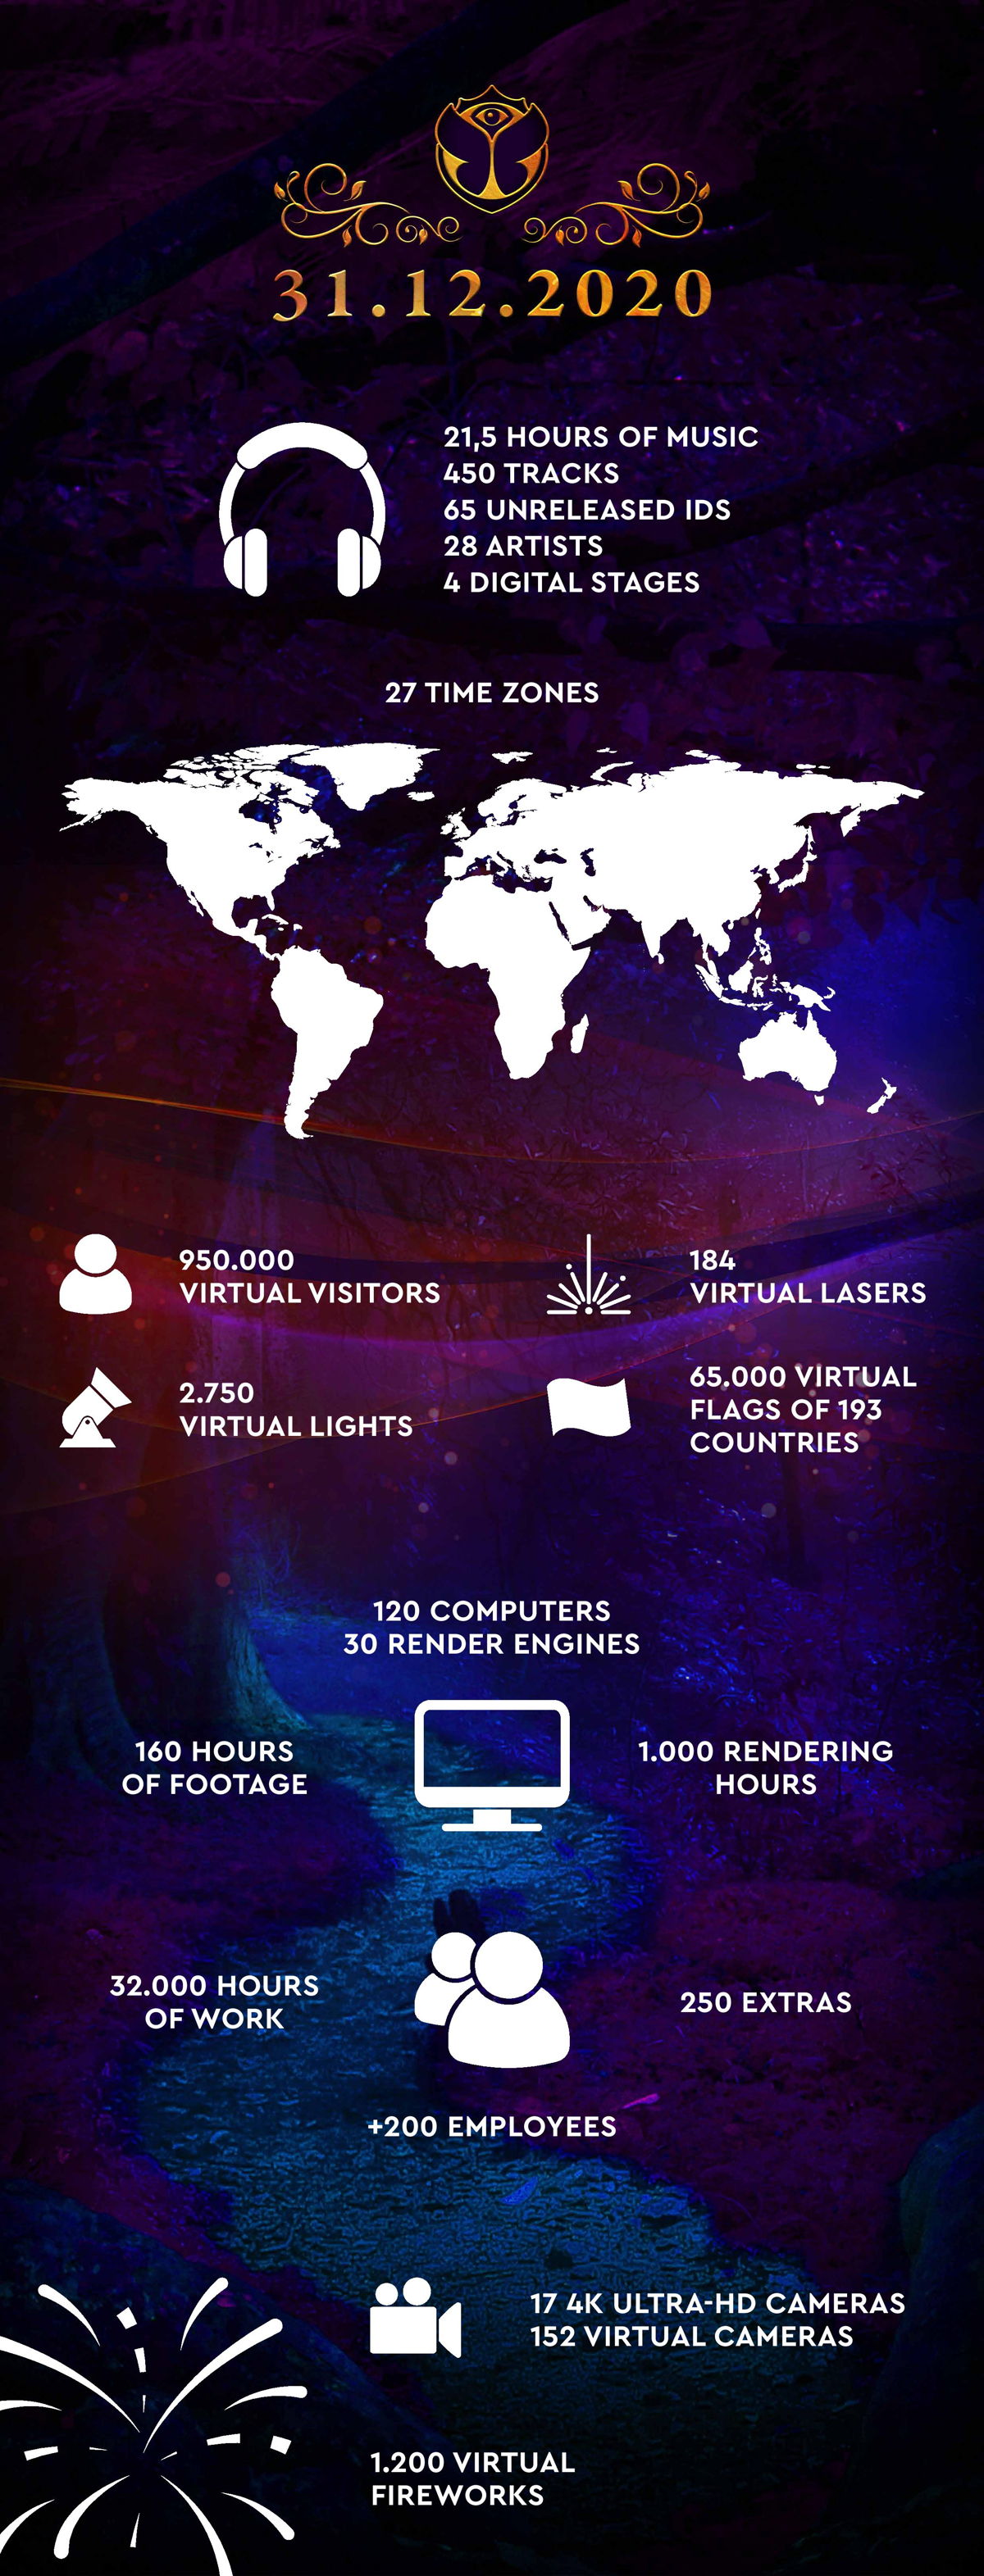 Tomorrowland 31.12.2020 - Infographic